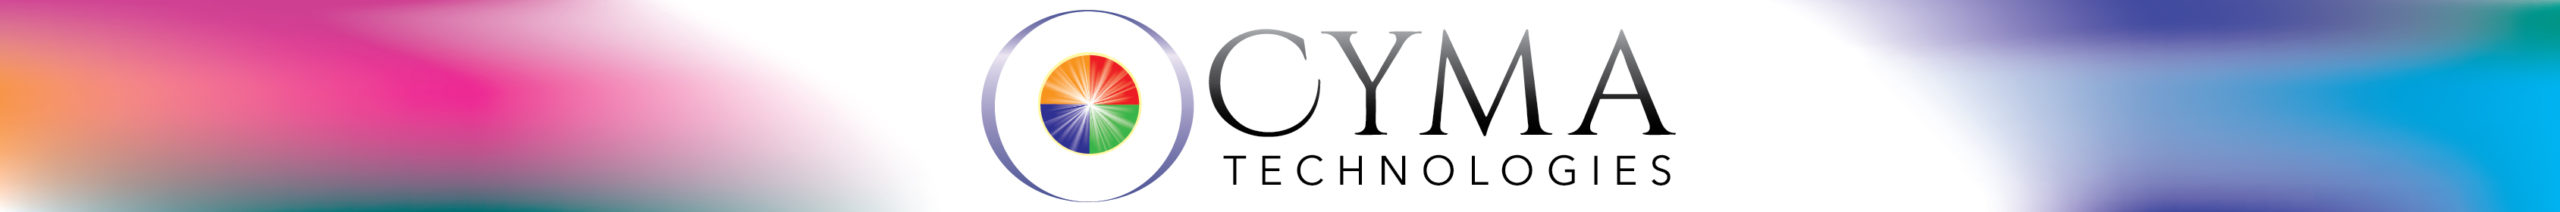 Cyma Technologies